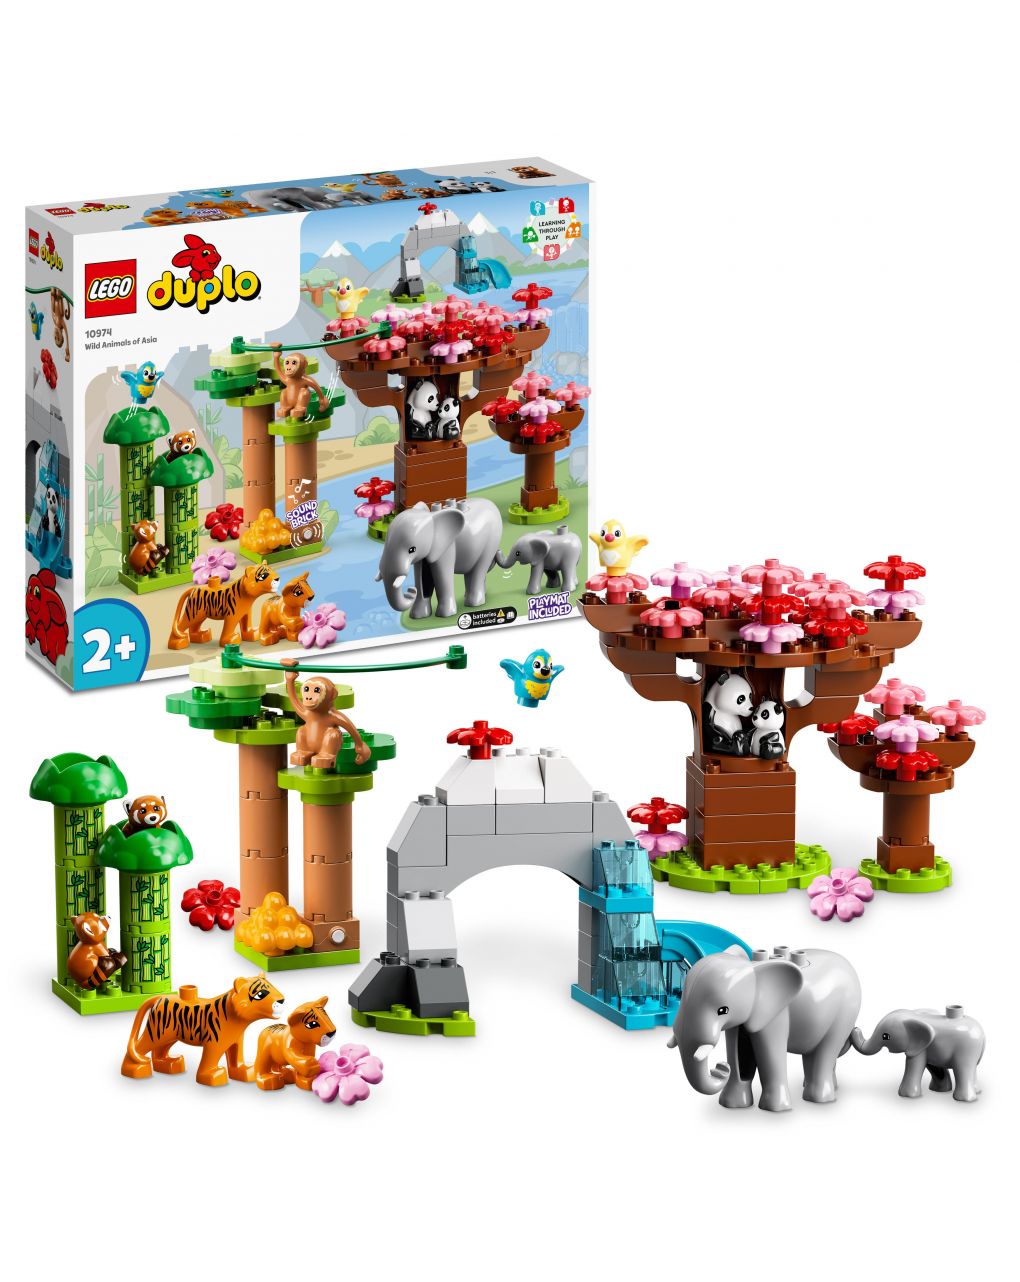 Animali dell’asia 10974 - lego duplo - LEGO Duplo